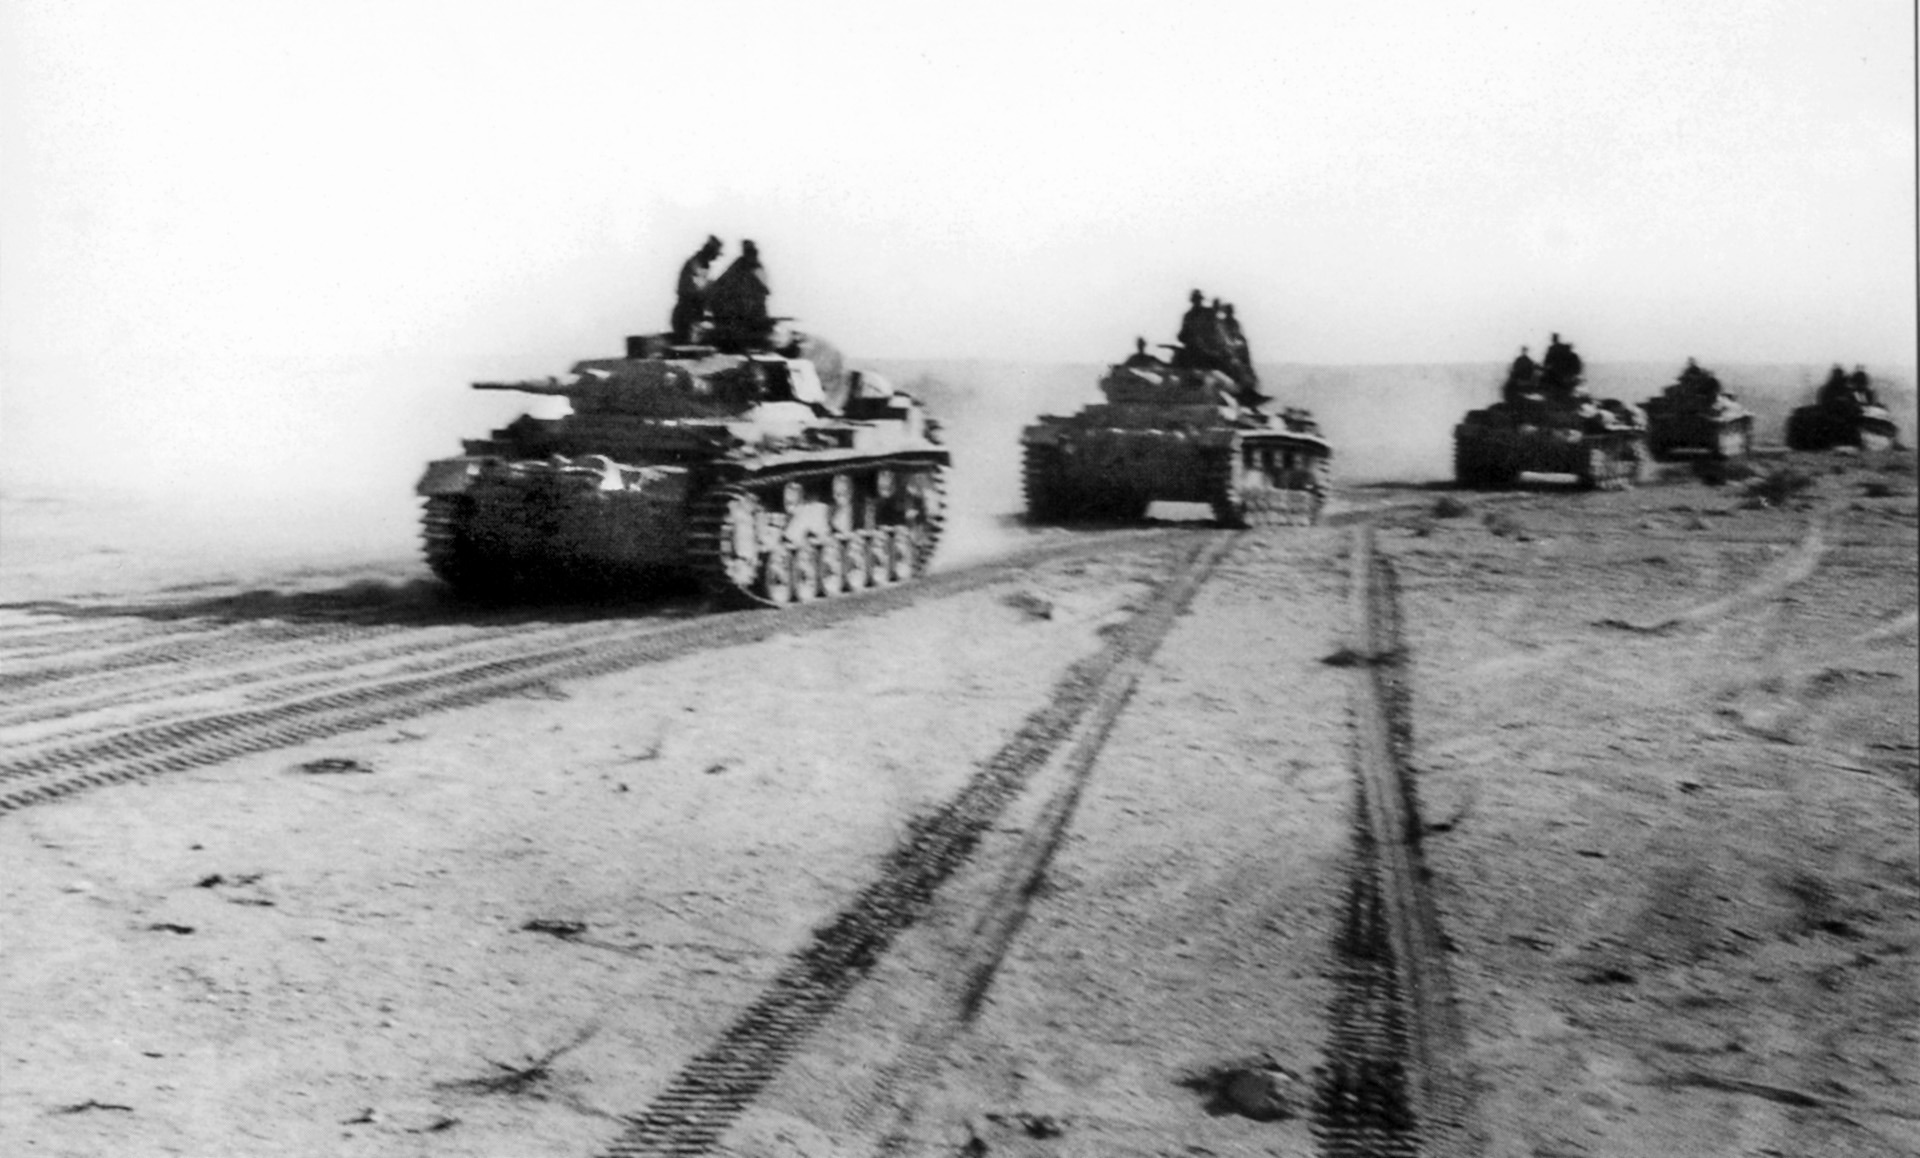 German Panzers advance through the desert toward Tobruk and the British forces at Sidi Rezegh.